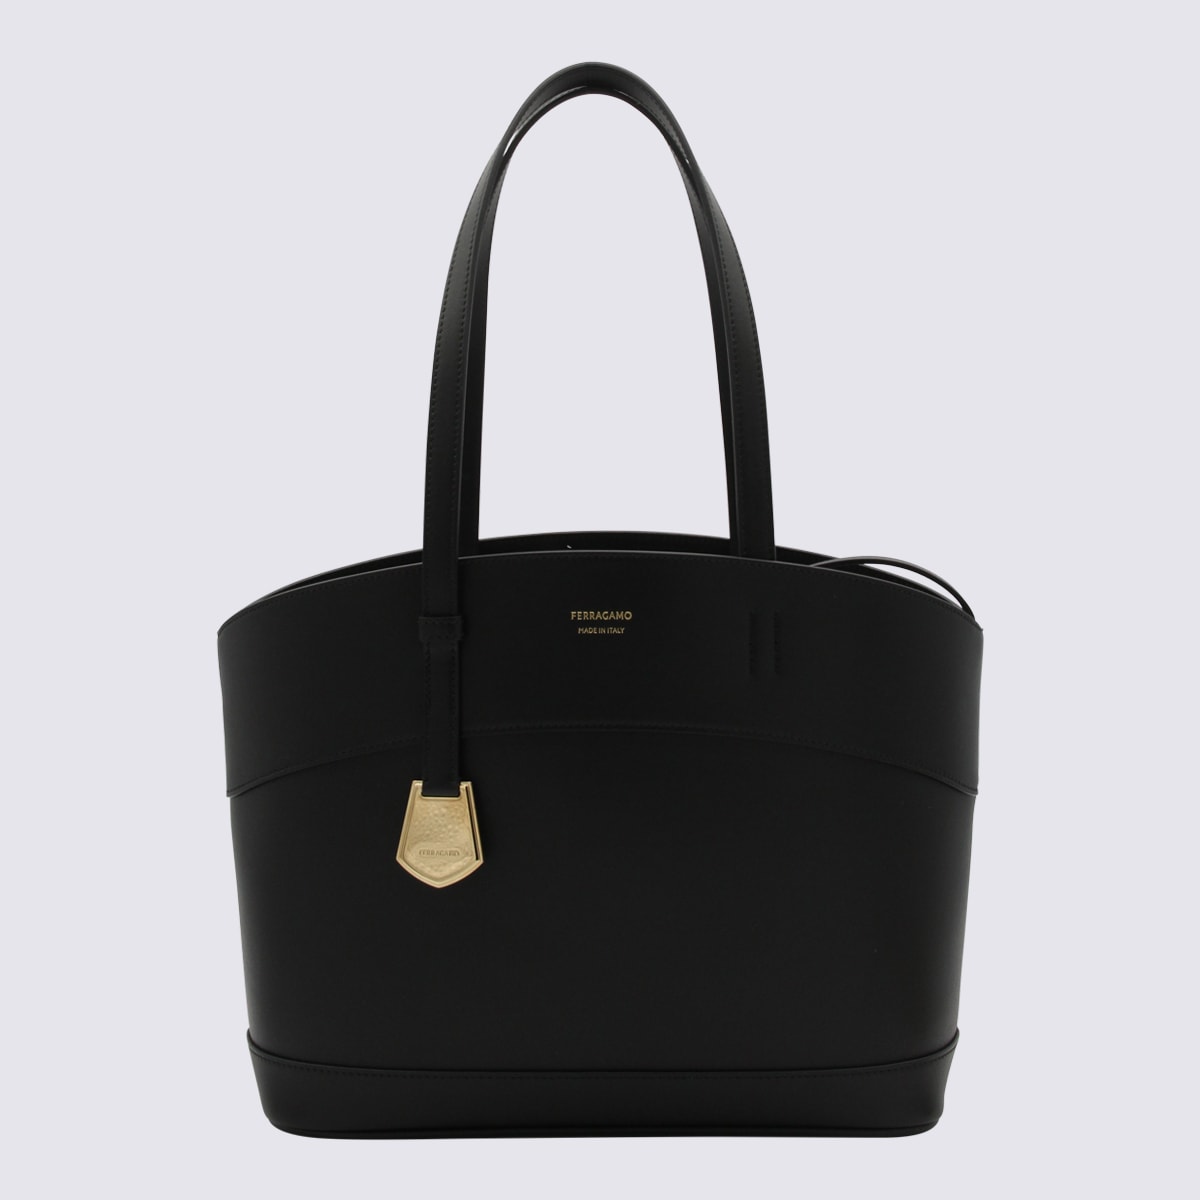 Ferragamo Black Leather Charming Tote Bag